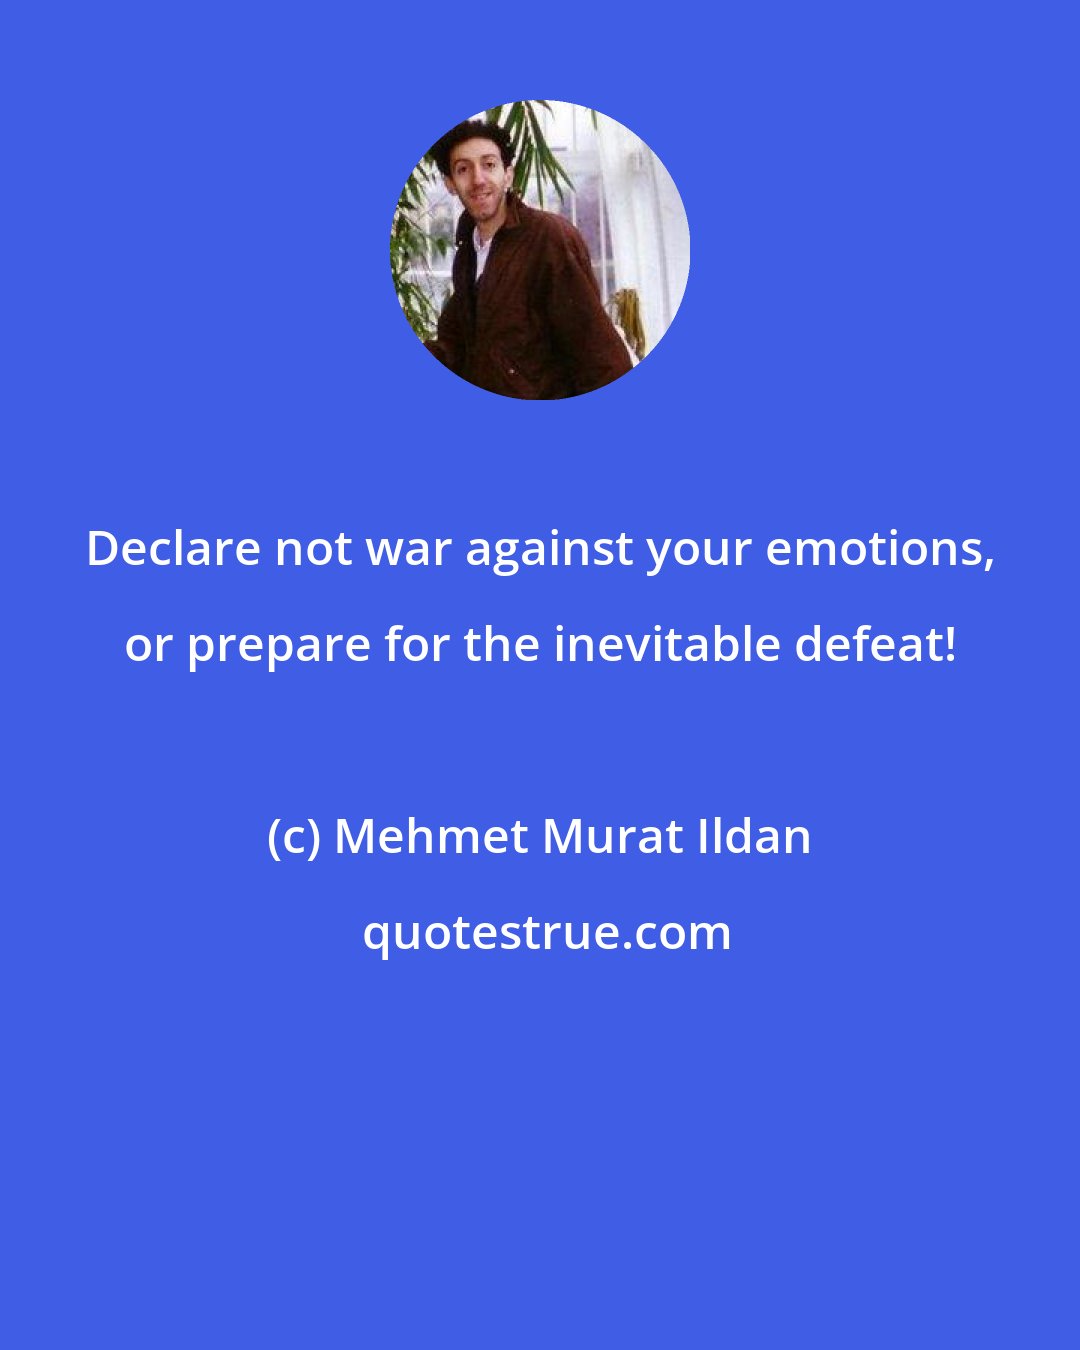 Mehmet Murat Ildan: Declare not war against your emotions, or prepare for the inevitable defeat!